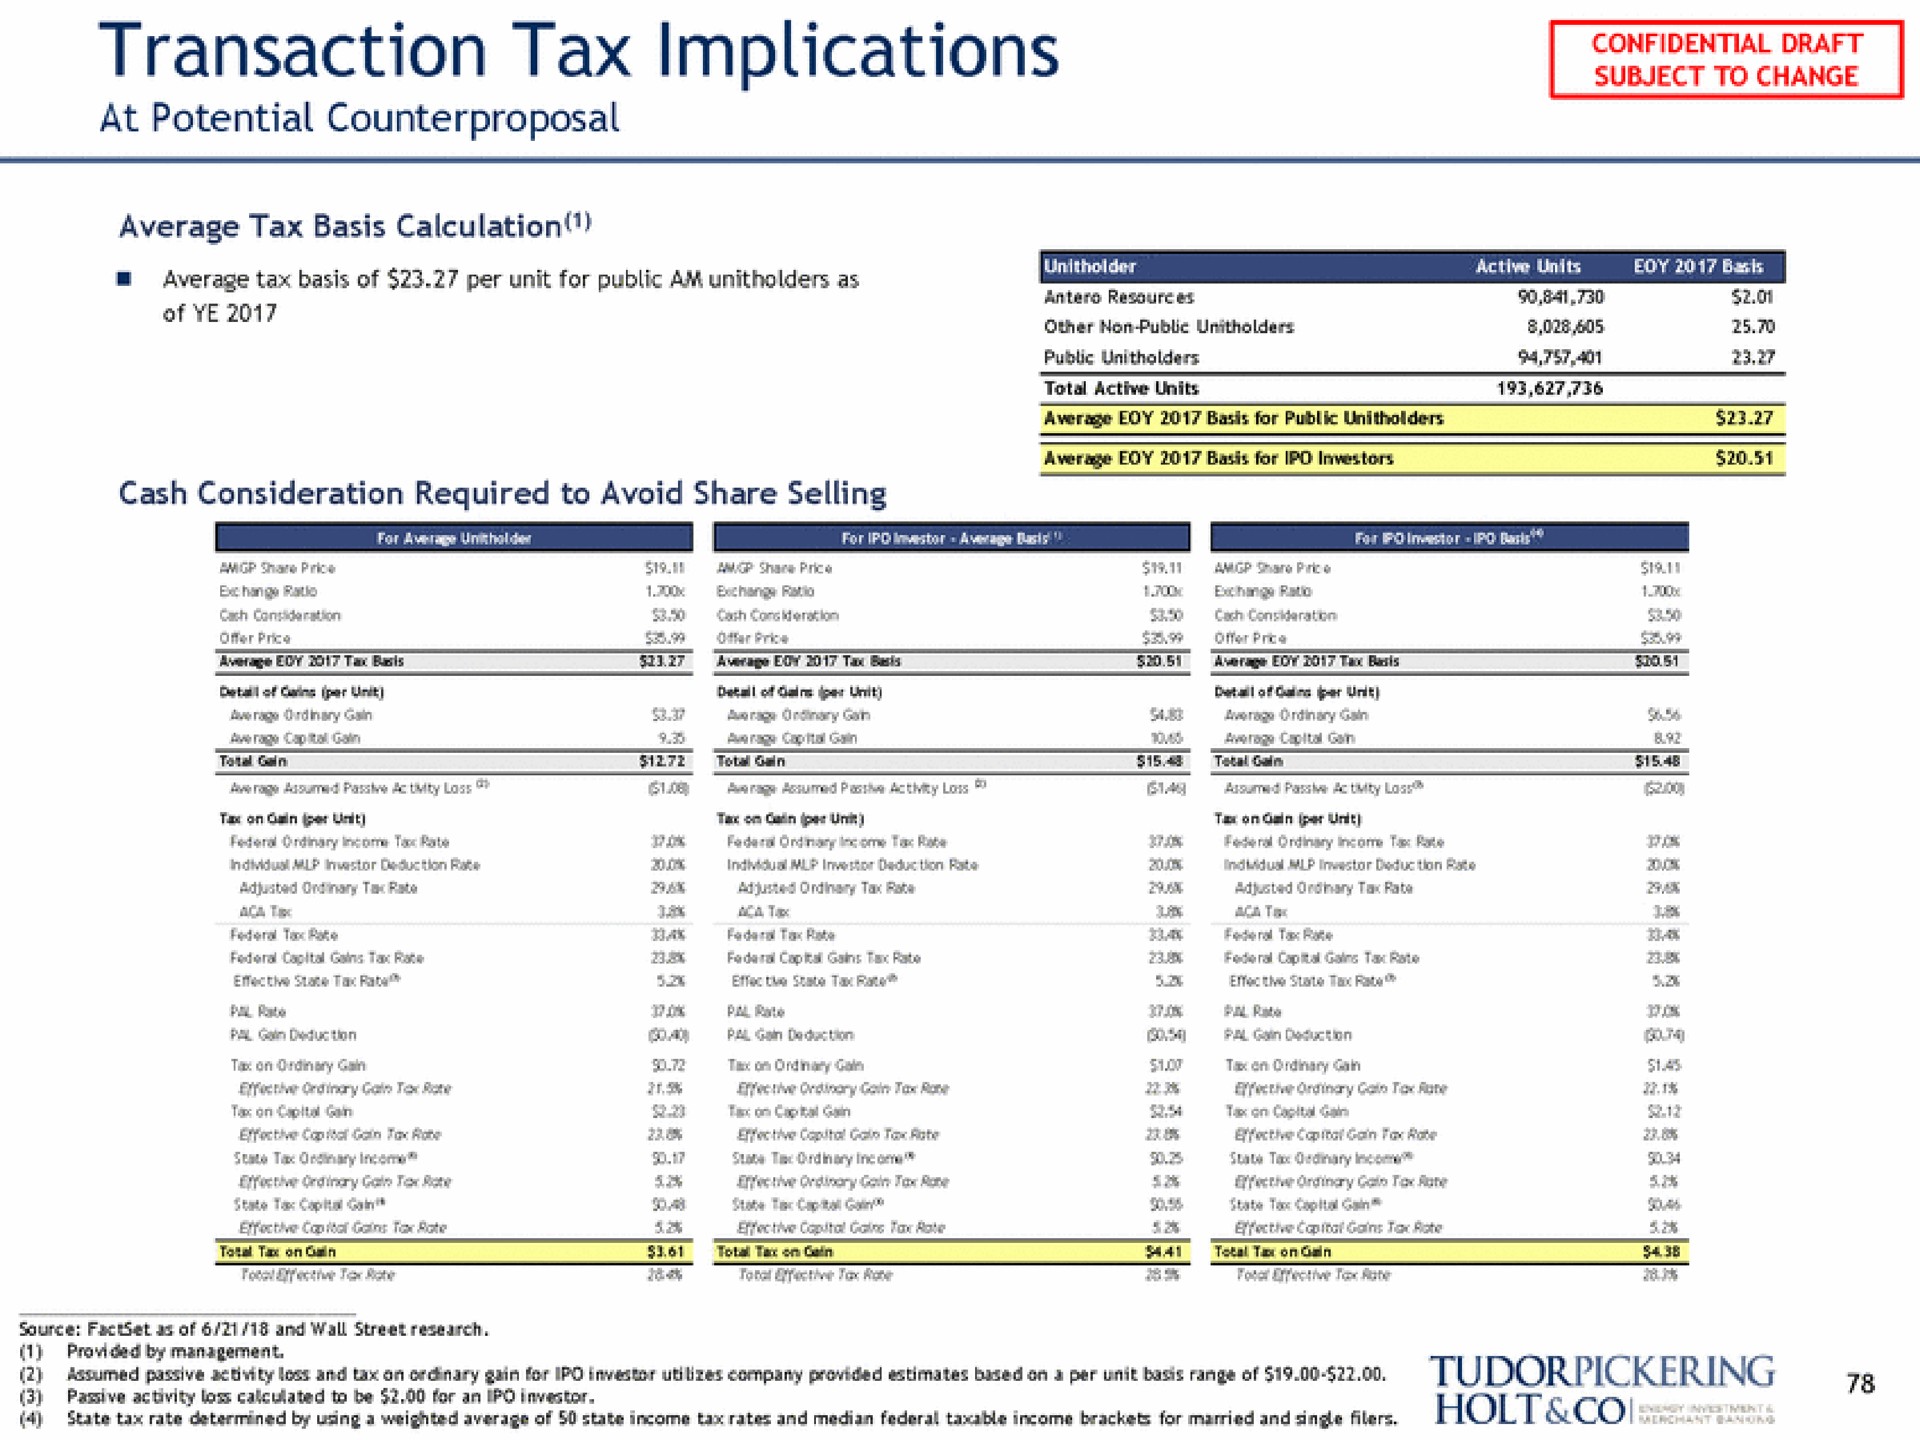 transaction tax implications | Tudor, Pickering, Holt & Co